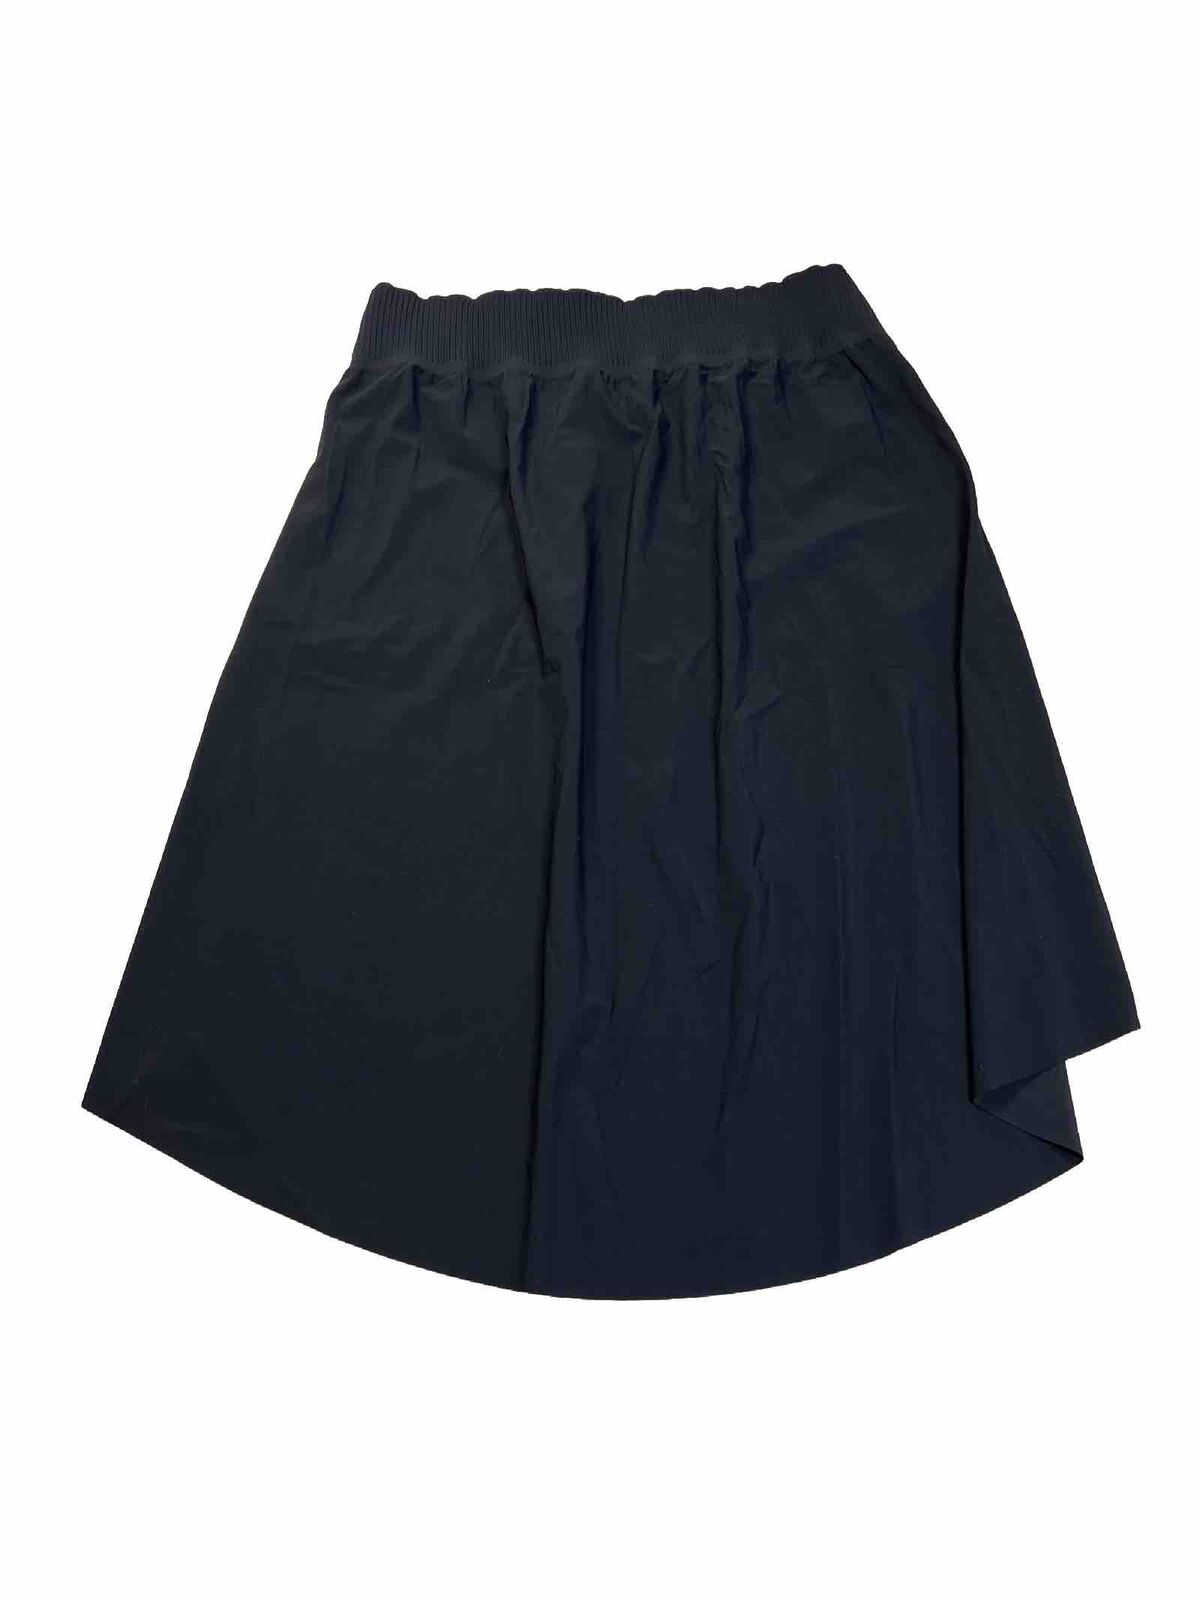 NEW Athleta Women's Black Unlined Cosmic Skirt with Pockets - M